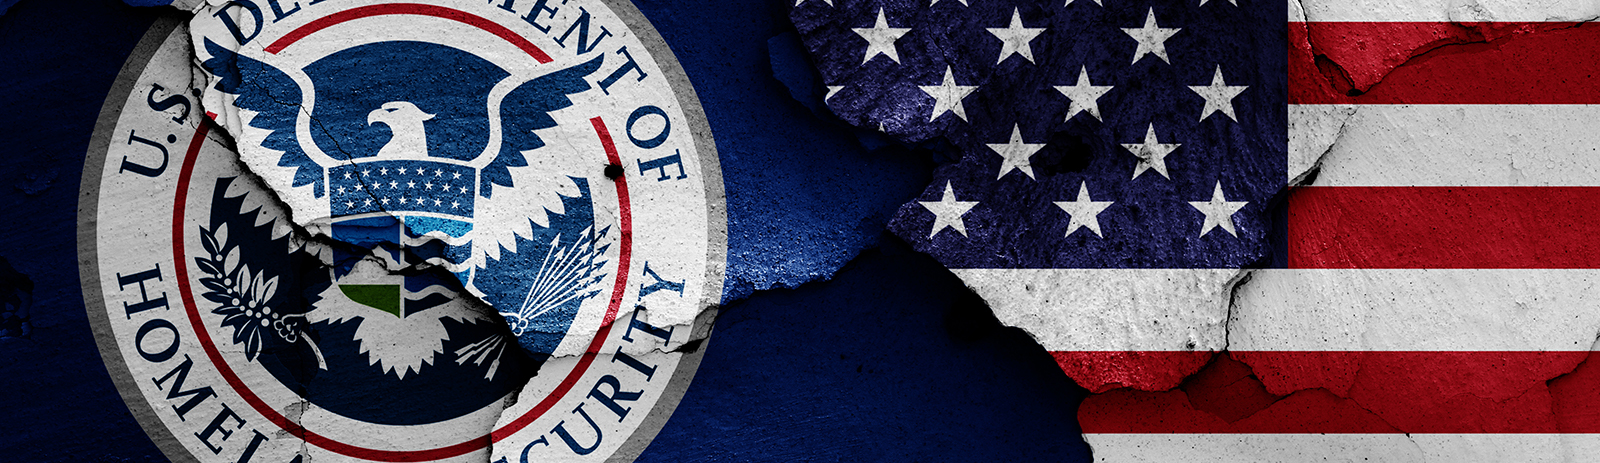 U.S. Department of Homeland Security image